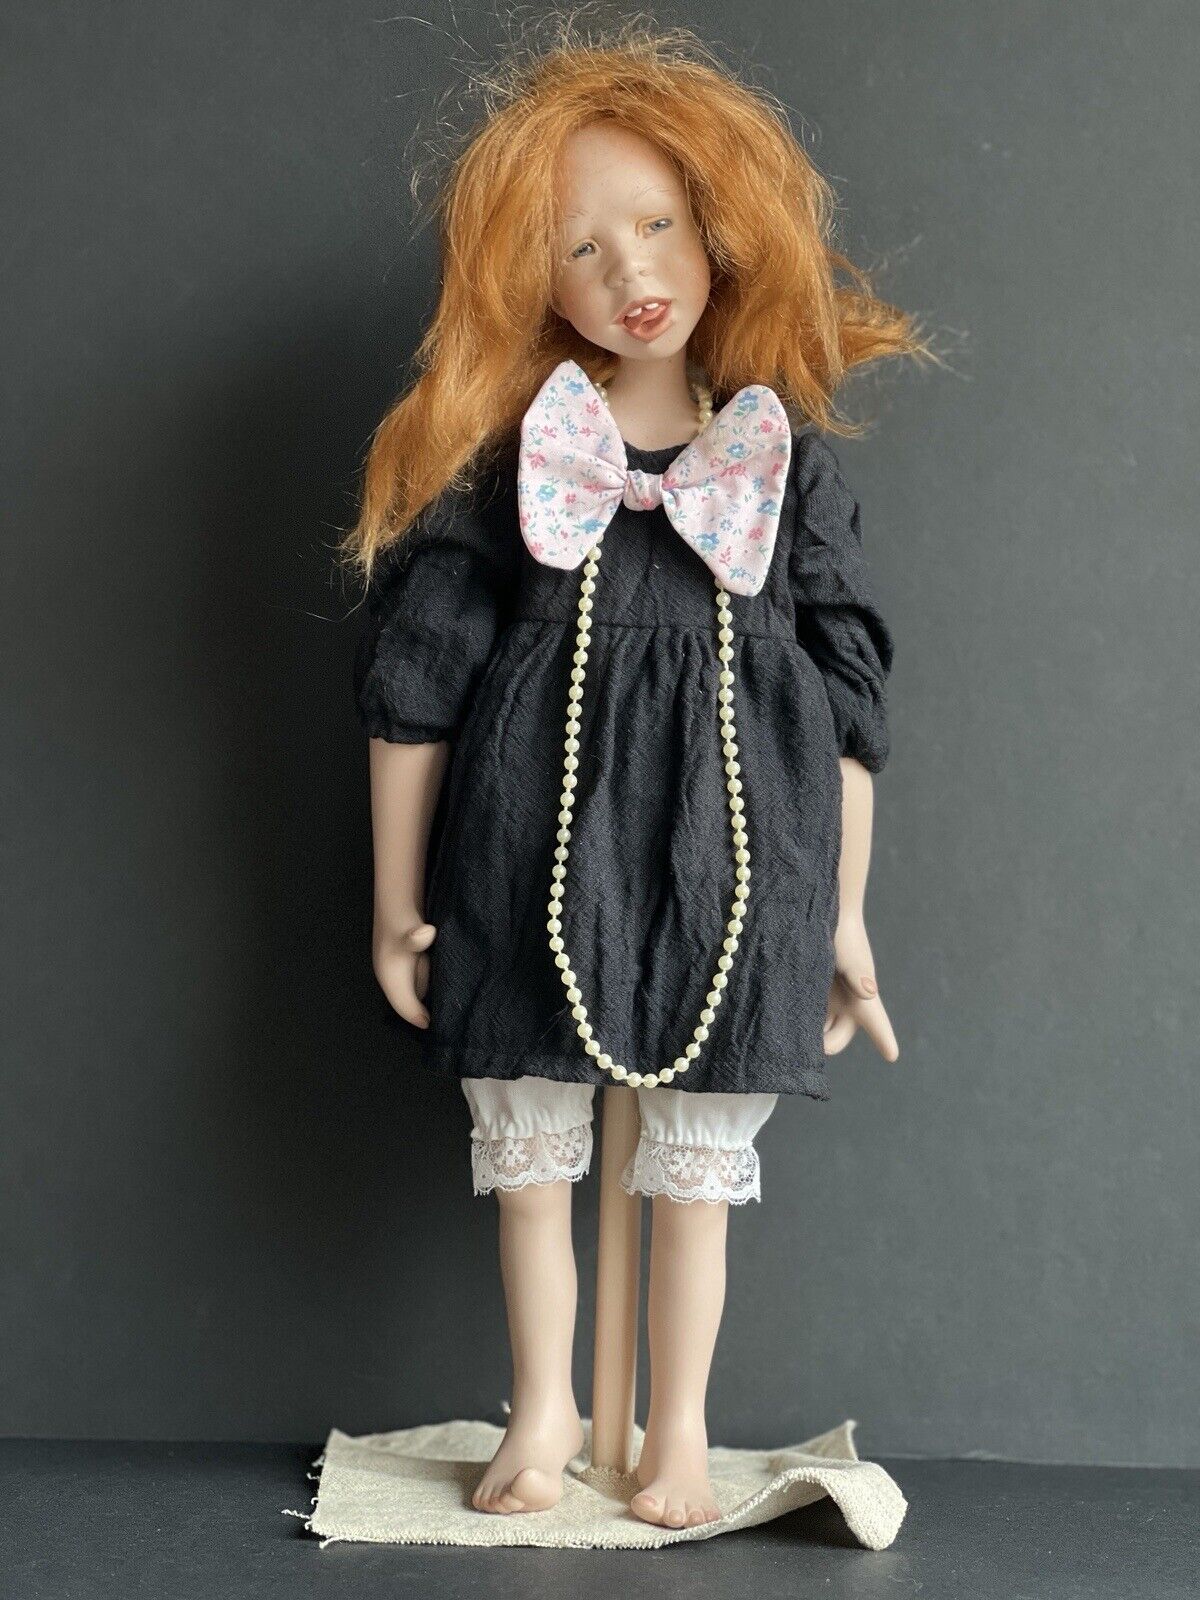 Collectible 15” Artist Doll Debbie by Sandi McAslan LE 50